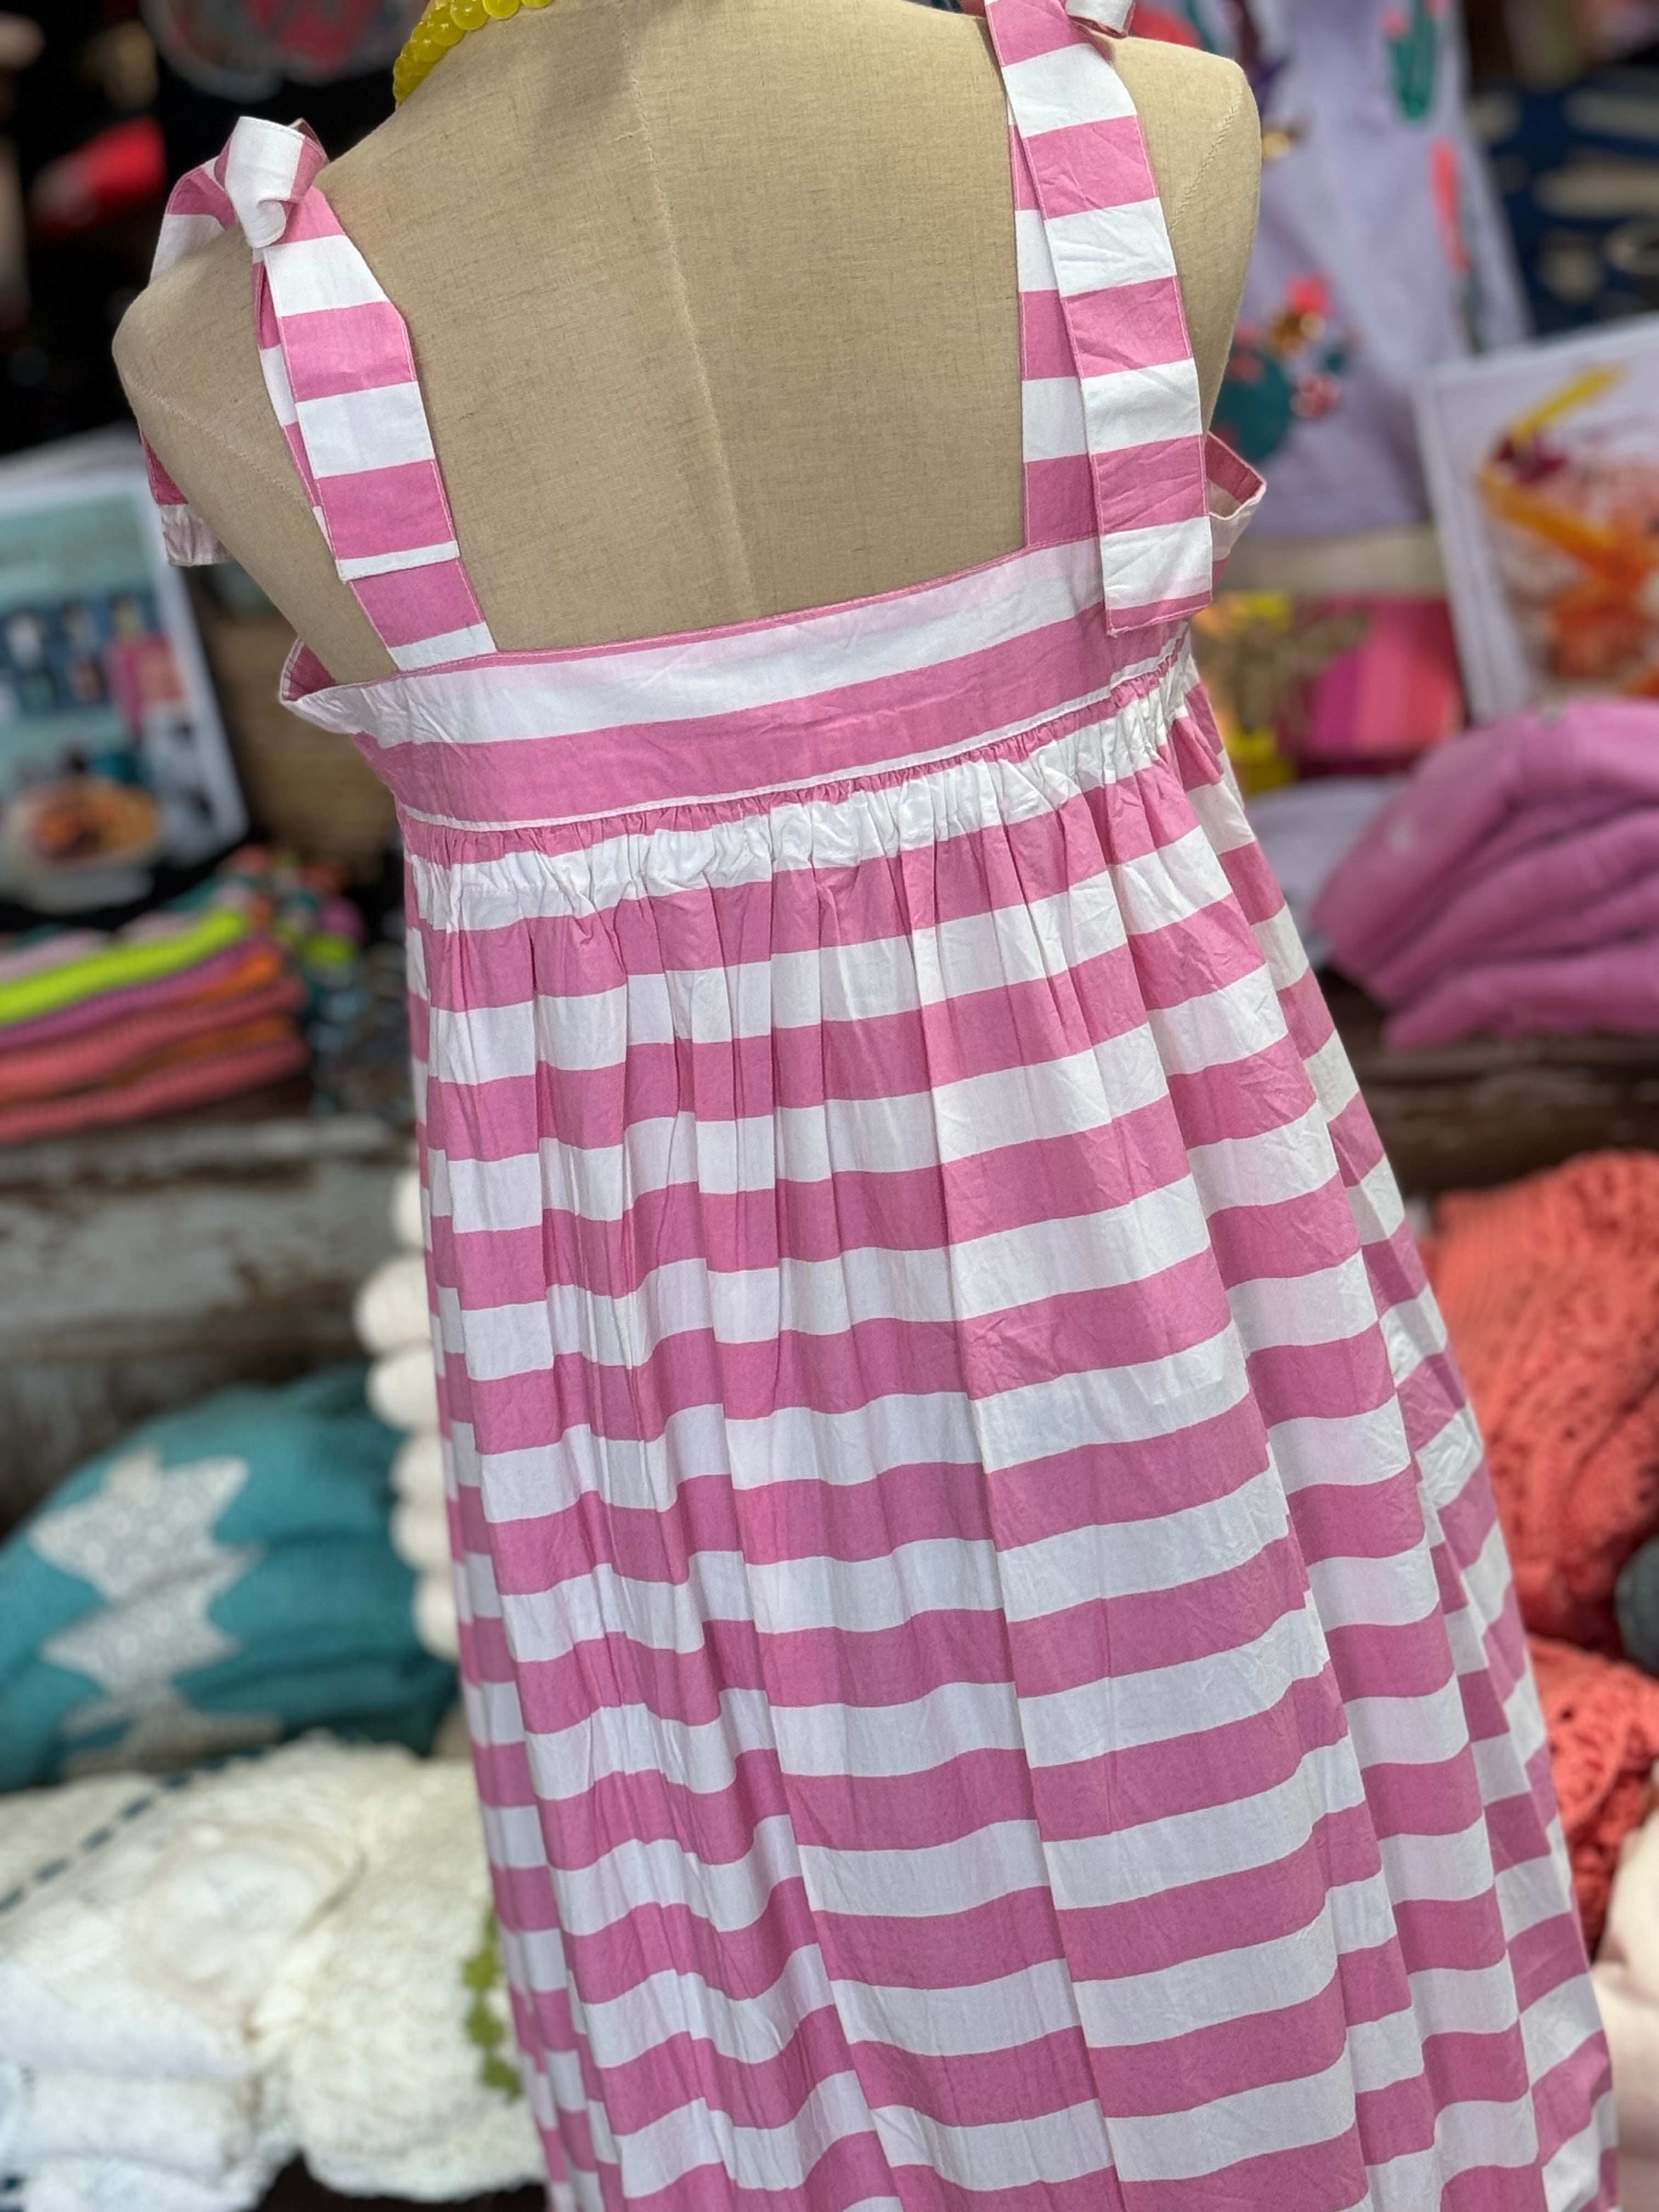 Candy Stripe Dress